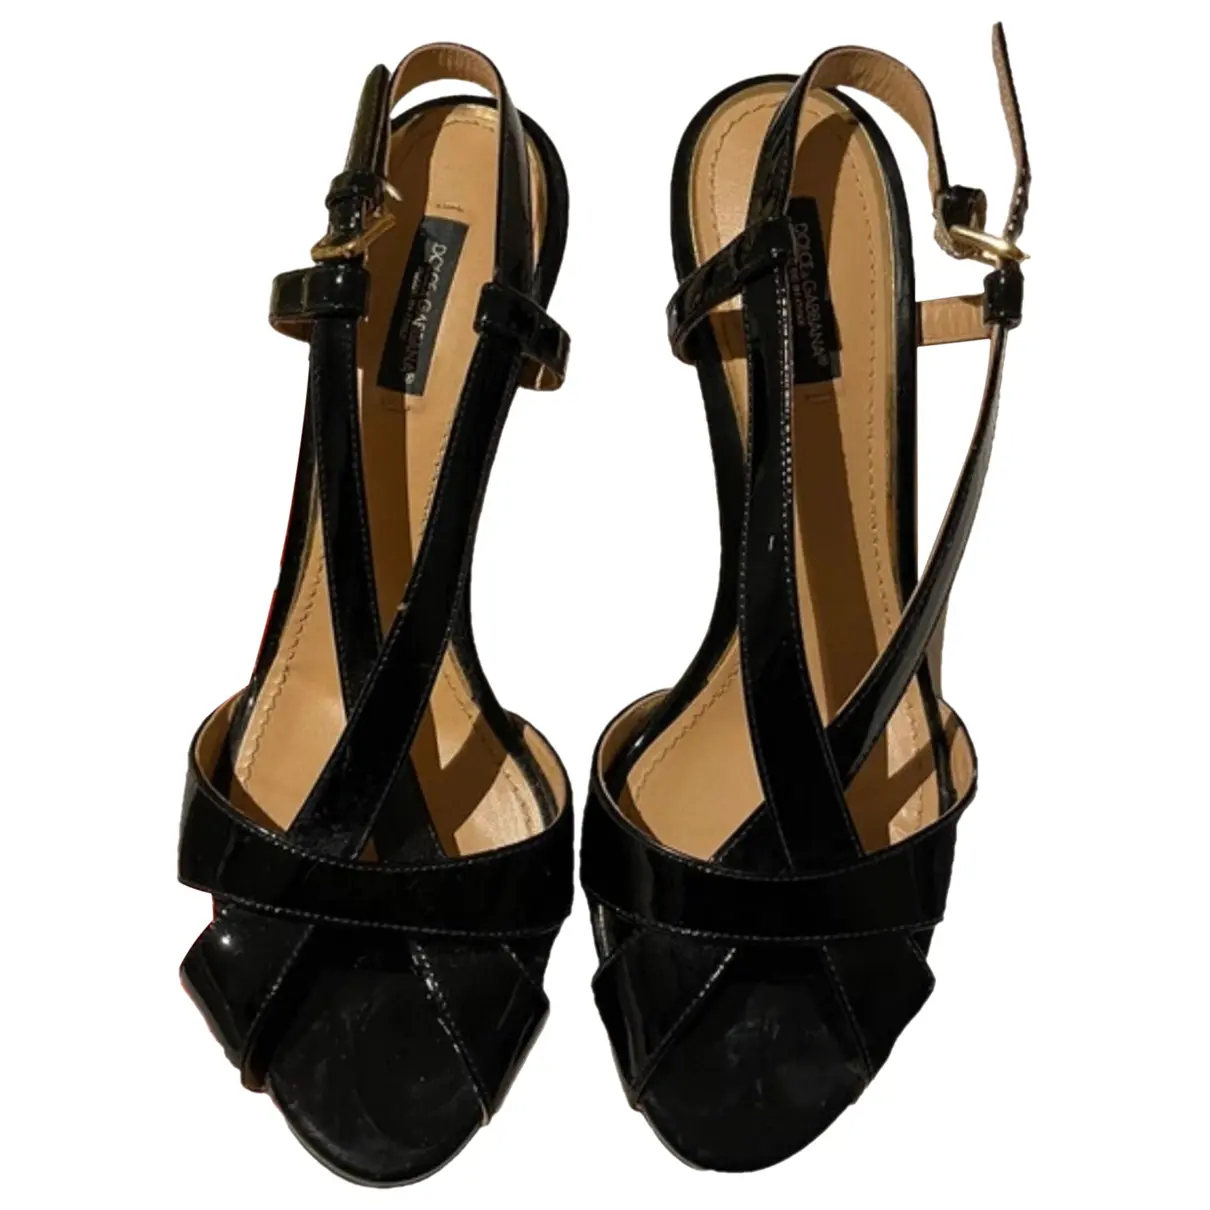 Taormina patent leather sandals